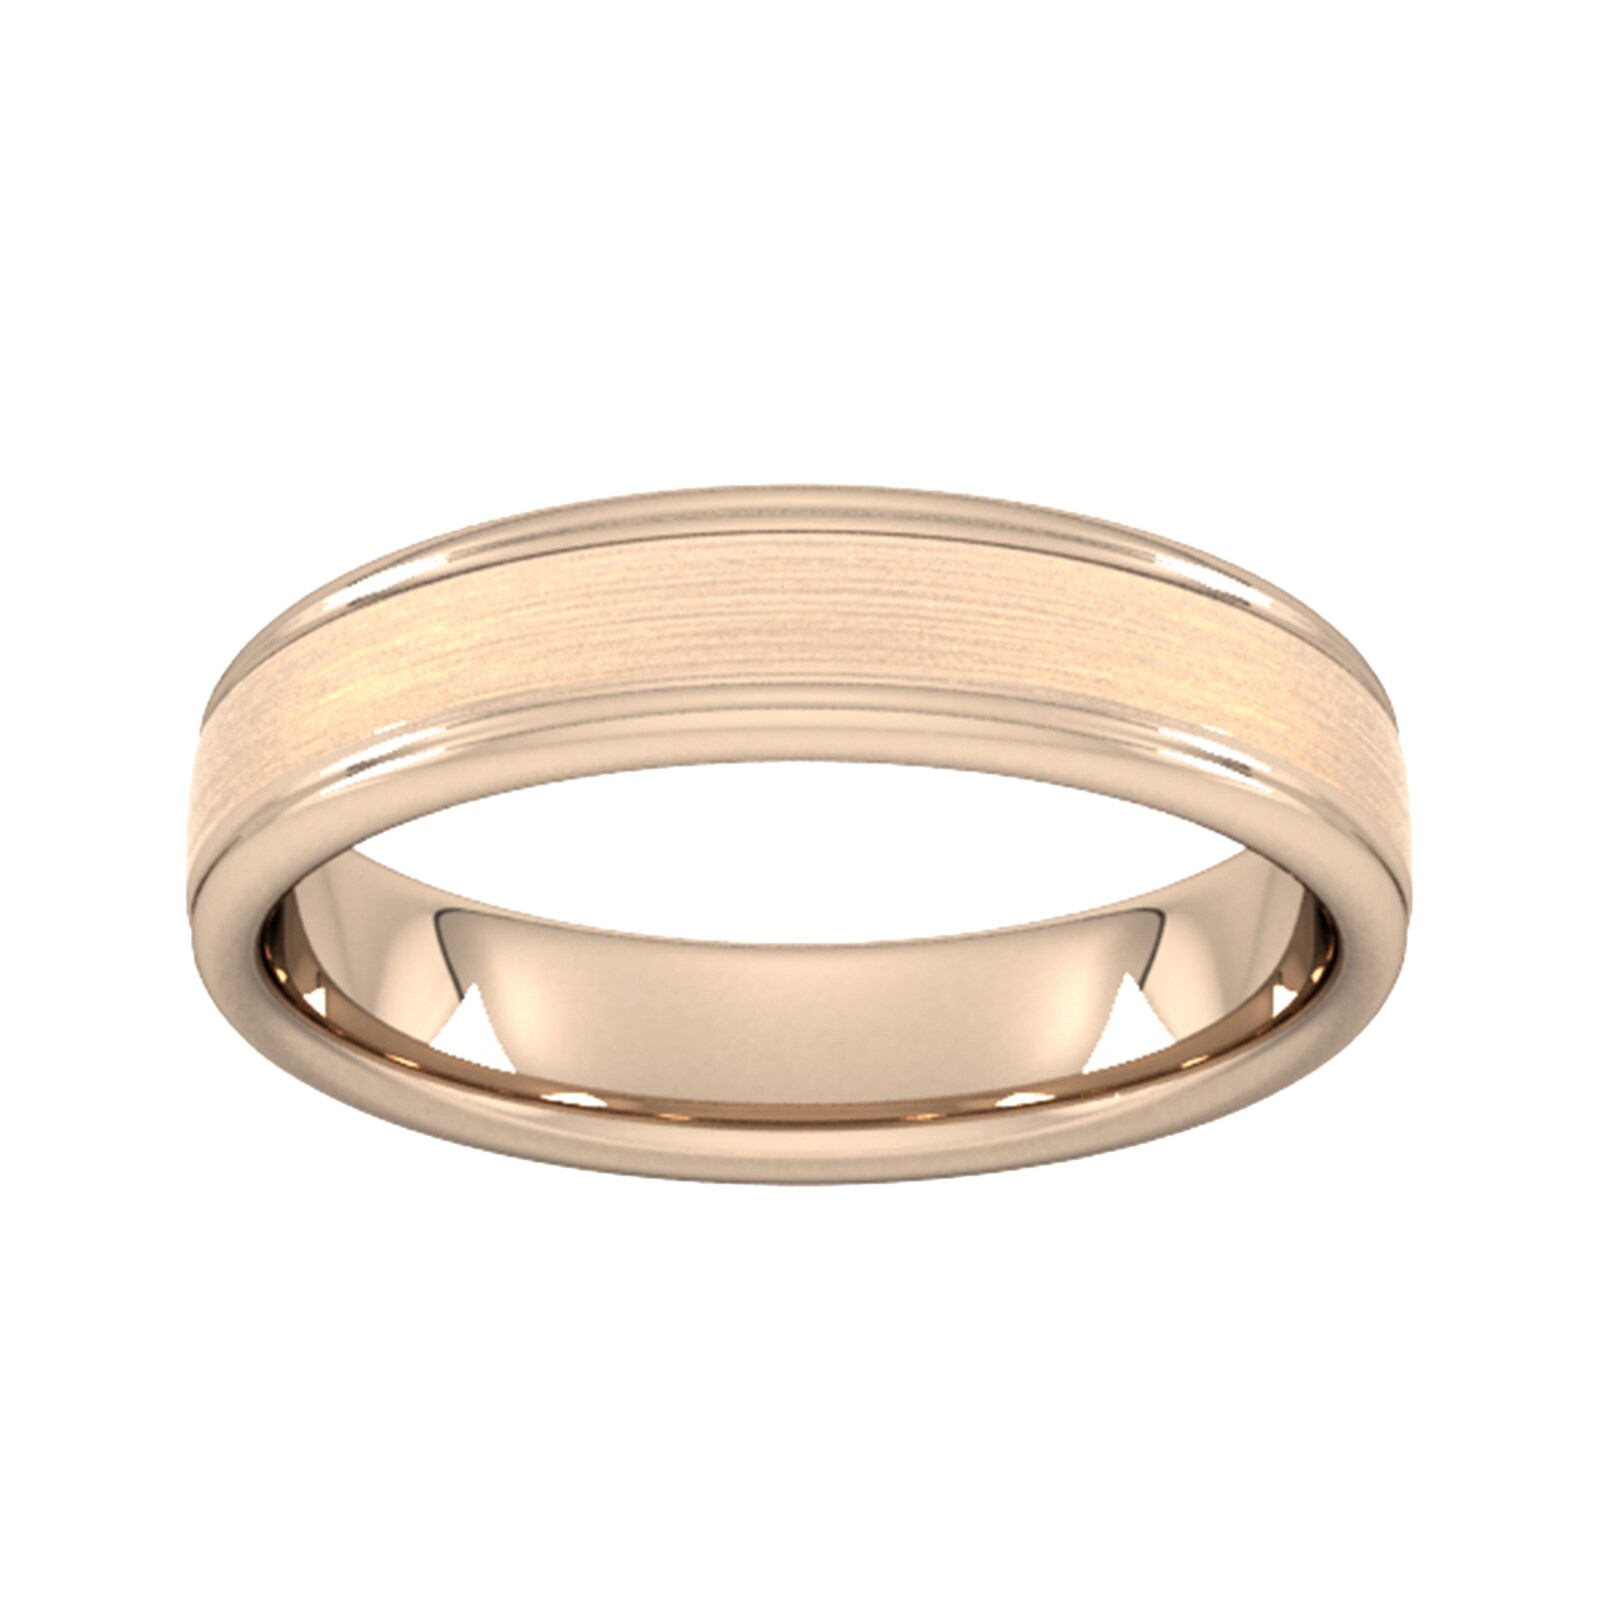 5mm Slight Court Standard Matt Centre With Grooves Wedding Ring In 9 Carat Rose Gold - Ring Size V